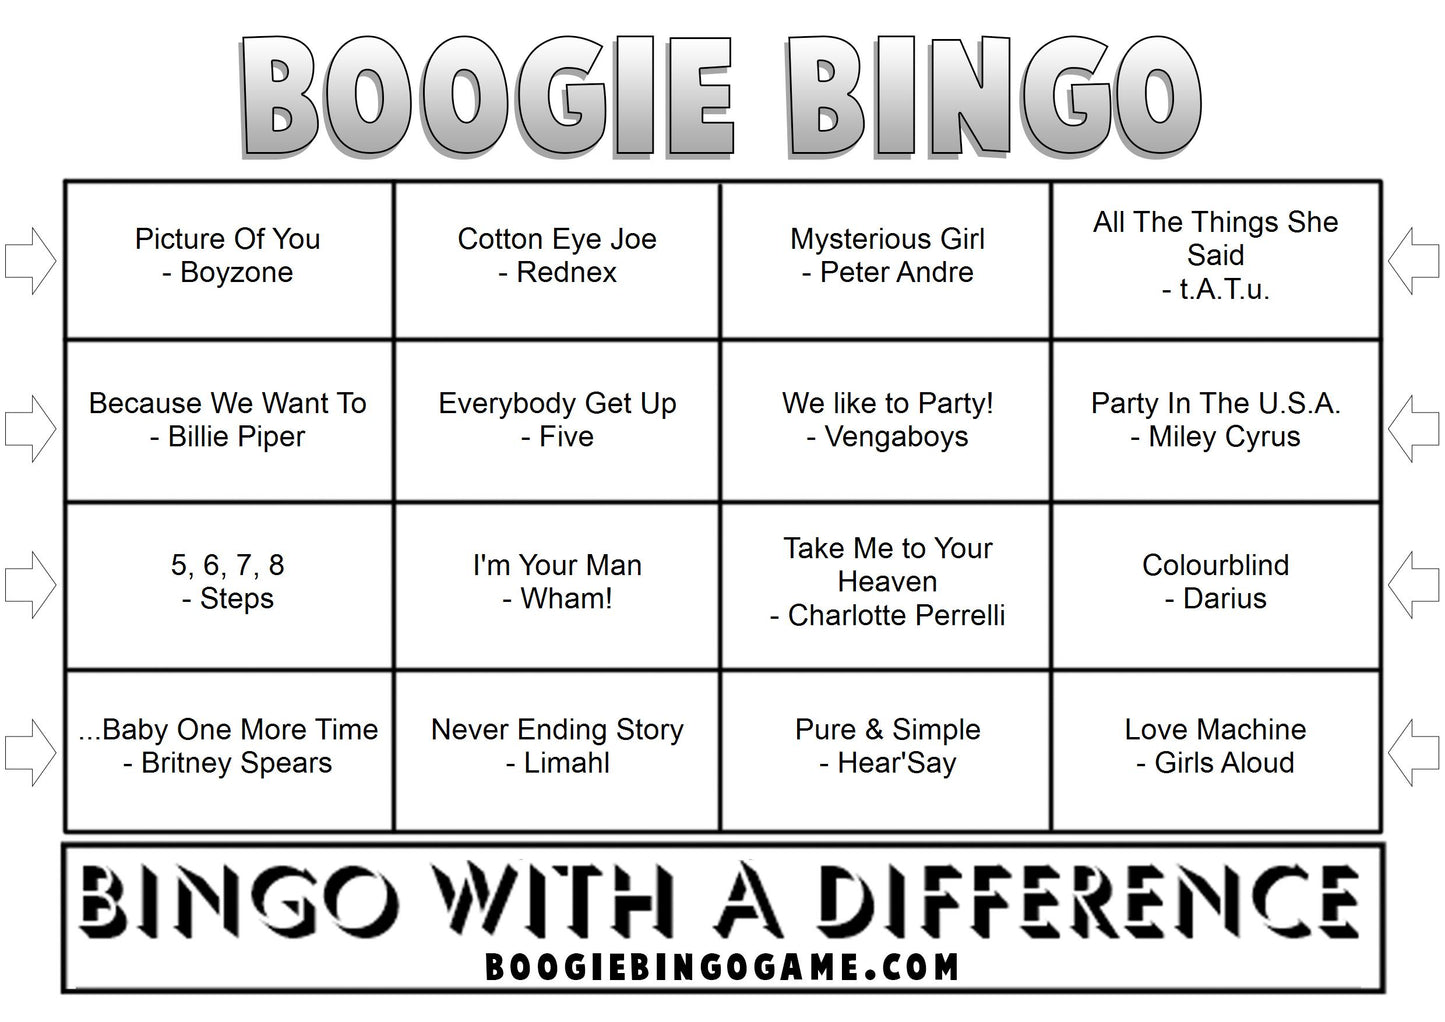 Game 49 | Cheesy Hits | Boogie Bingo | Printable Music Bingo Tickets